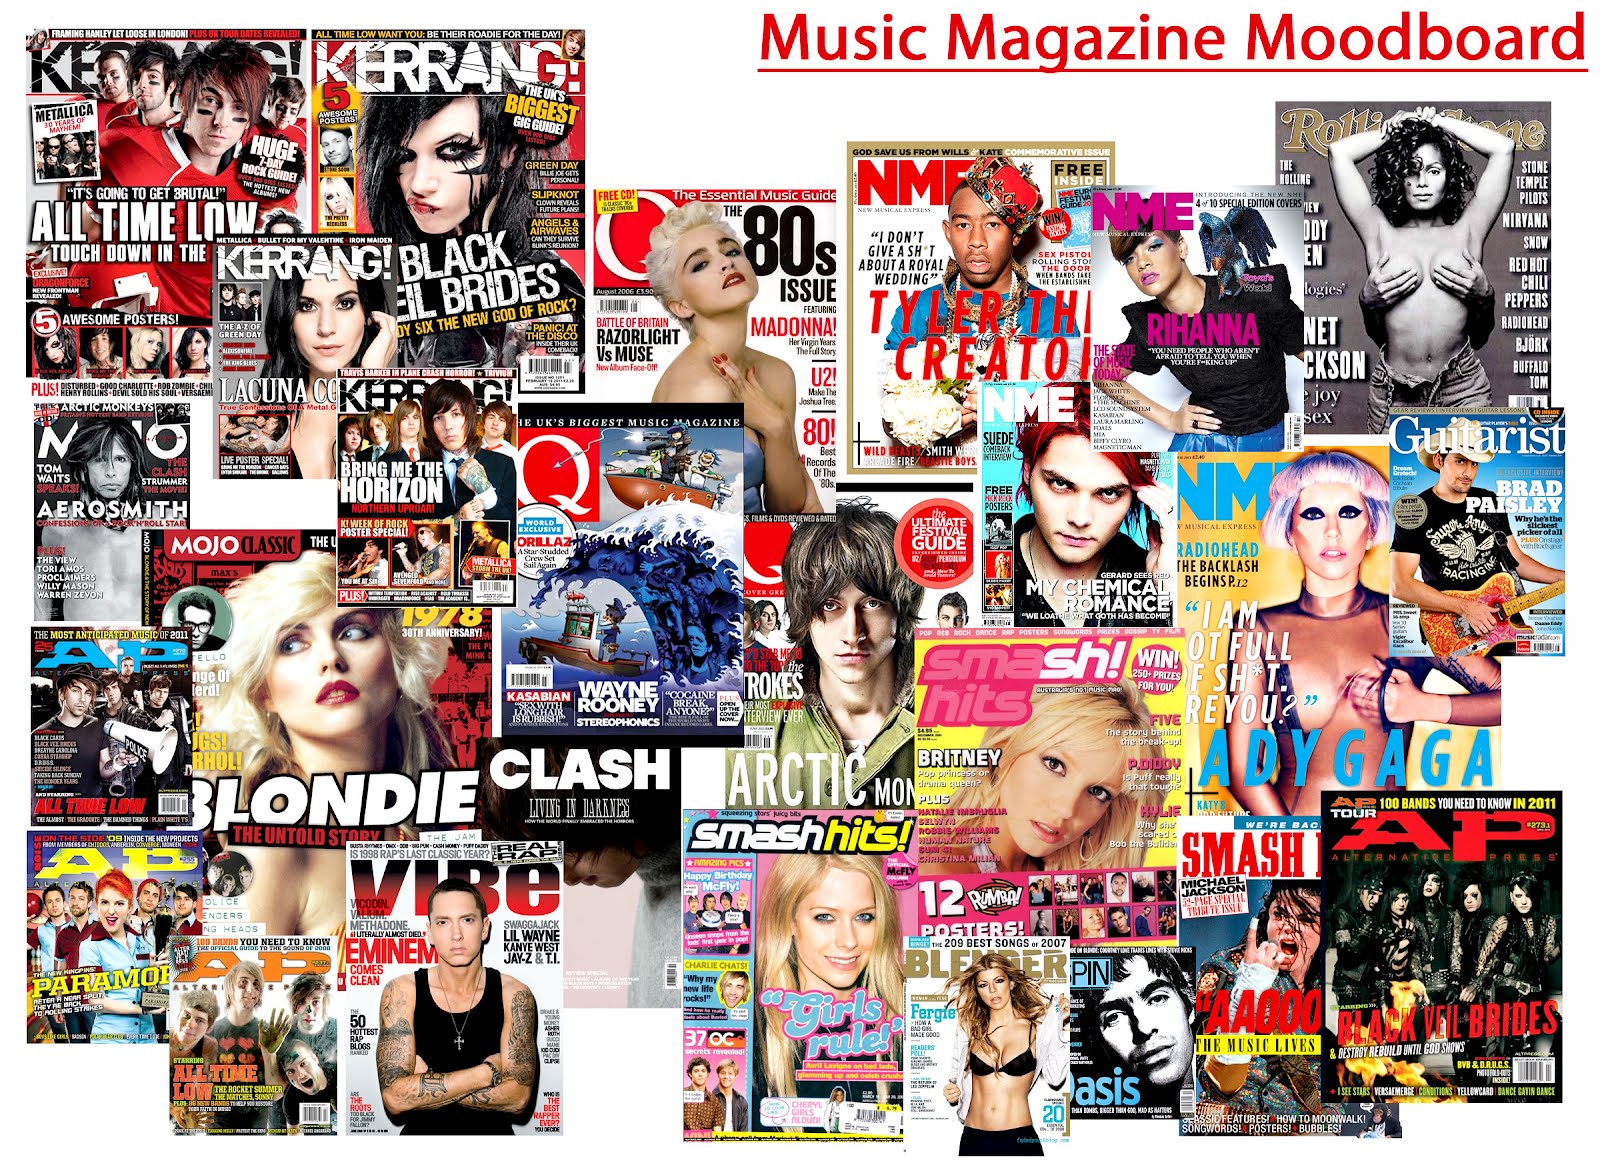 Shelley's Media Blog: Music Magazine Moodboard & Initial Ideas for a Music Magazine